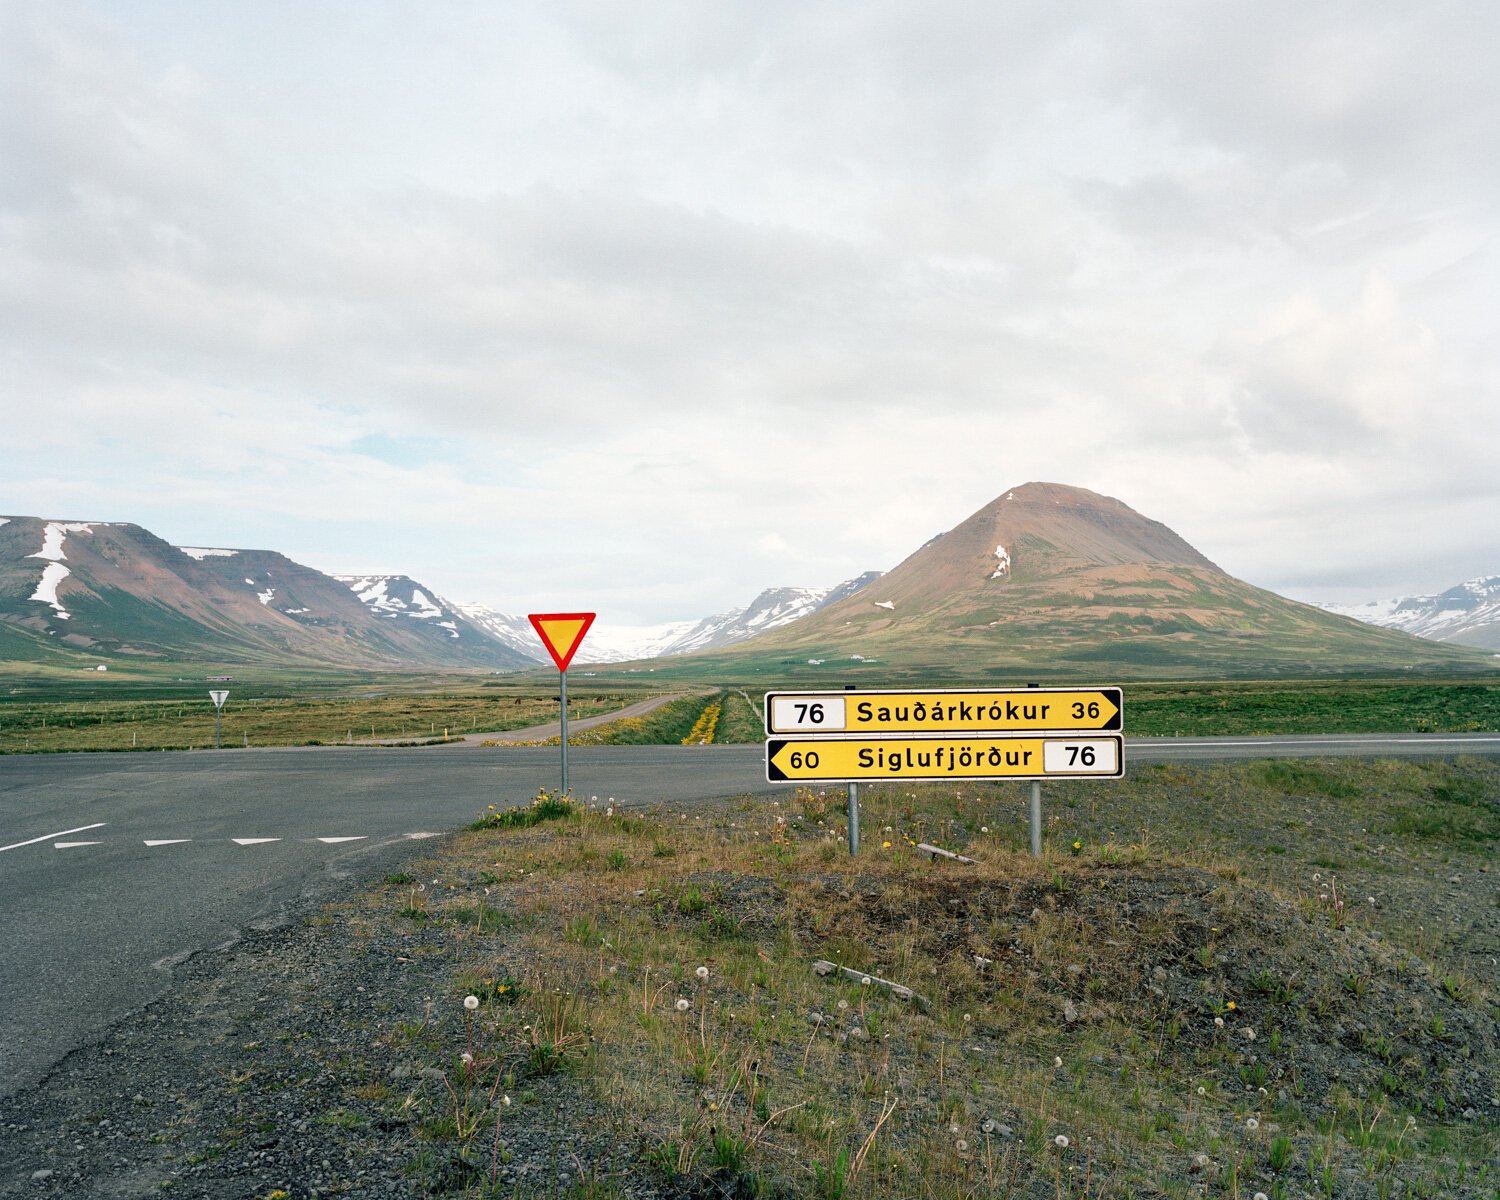  Iceland_Signs at Hofsos 001 